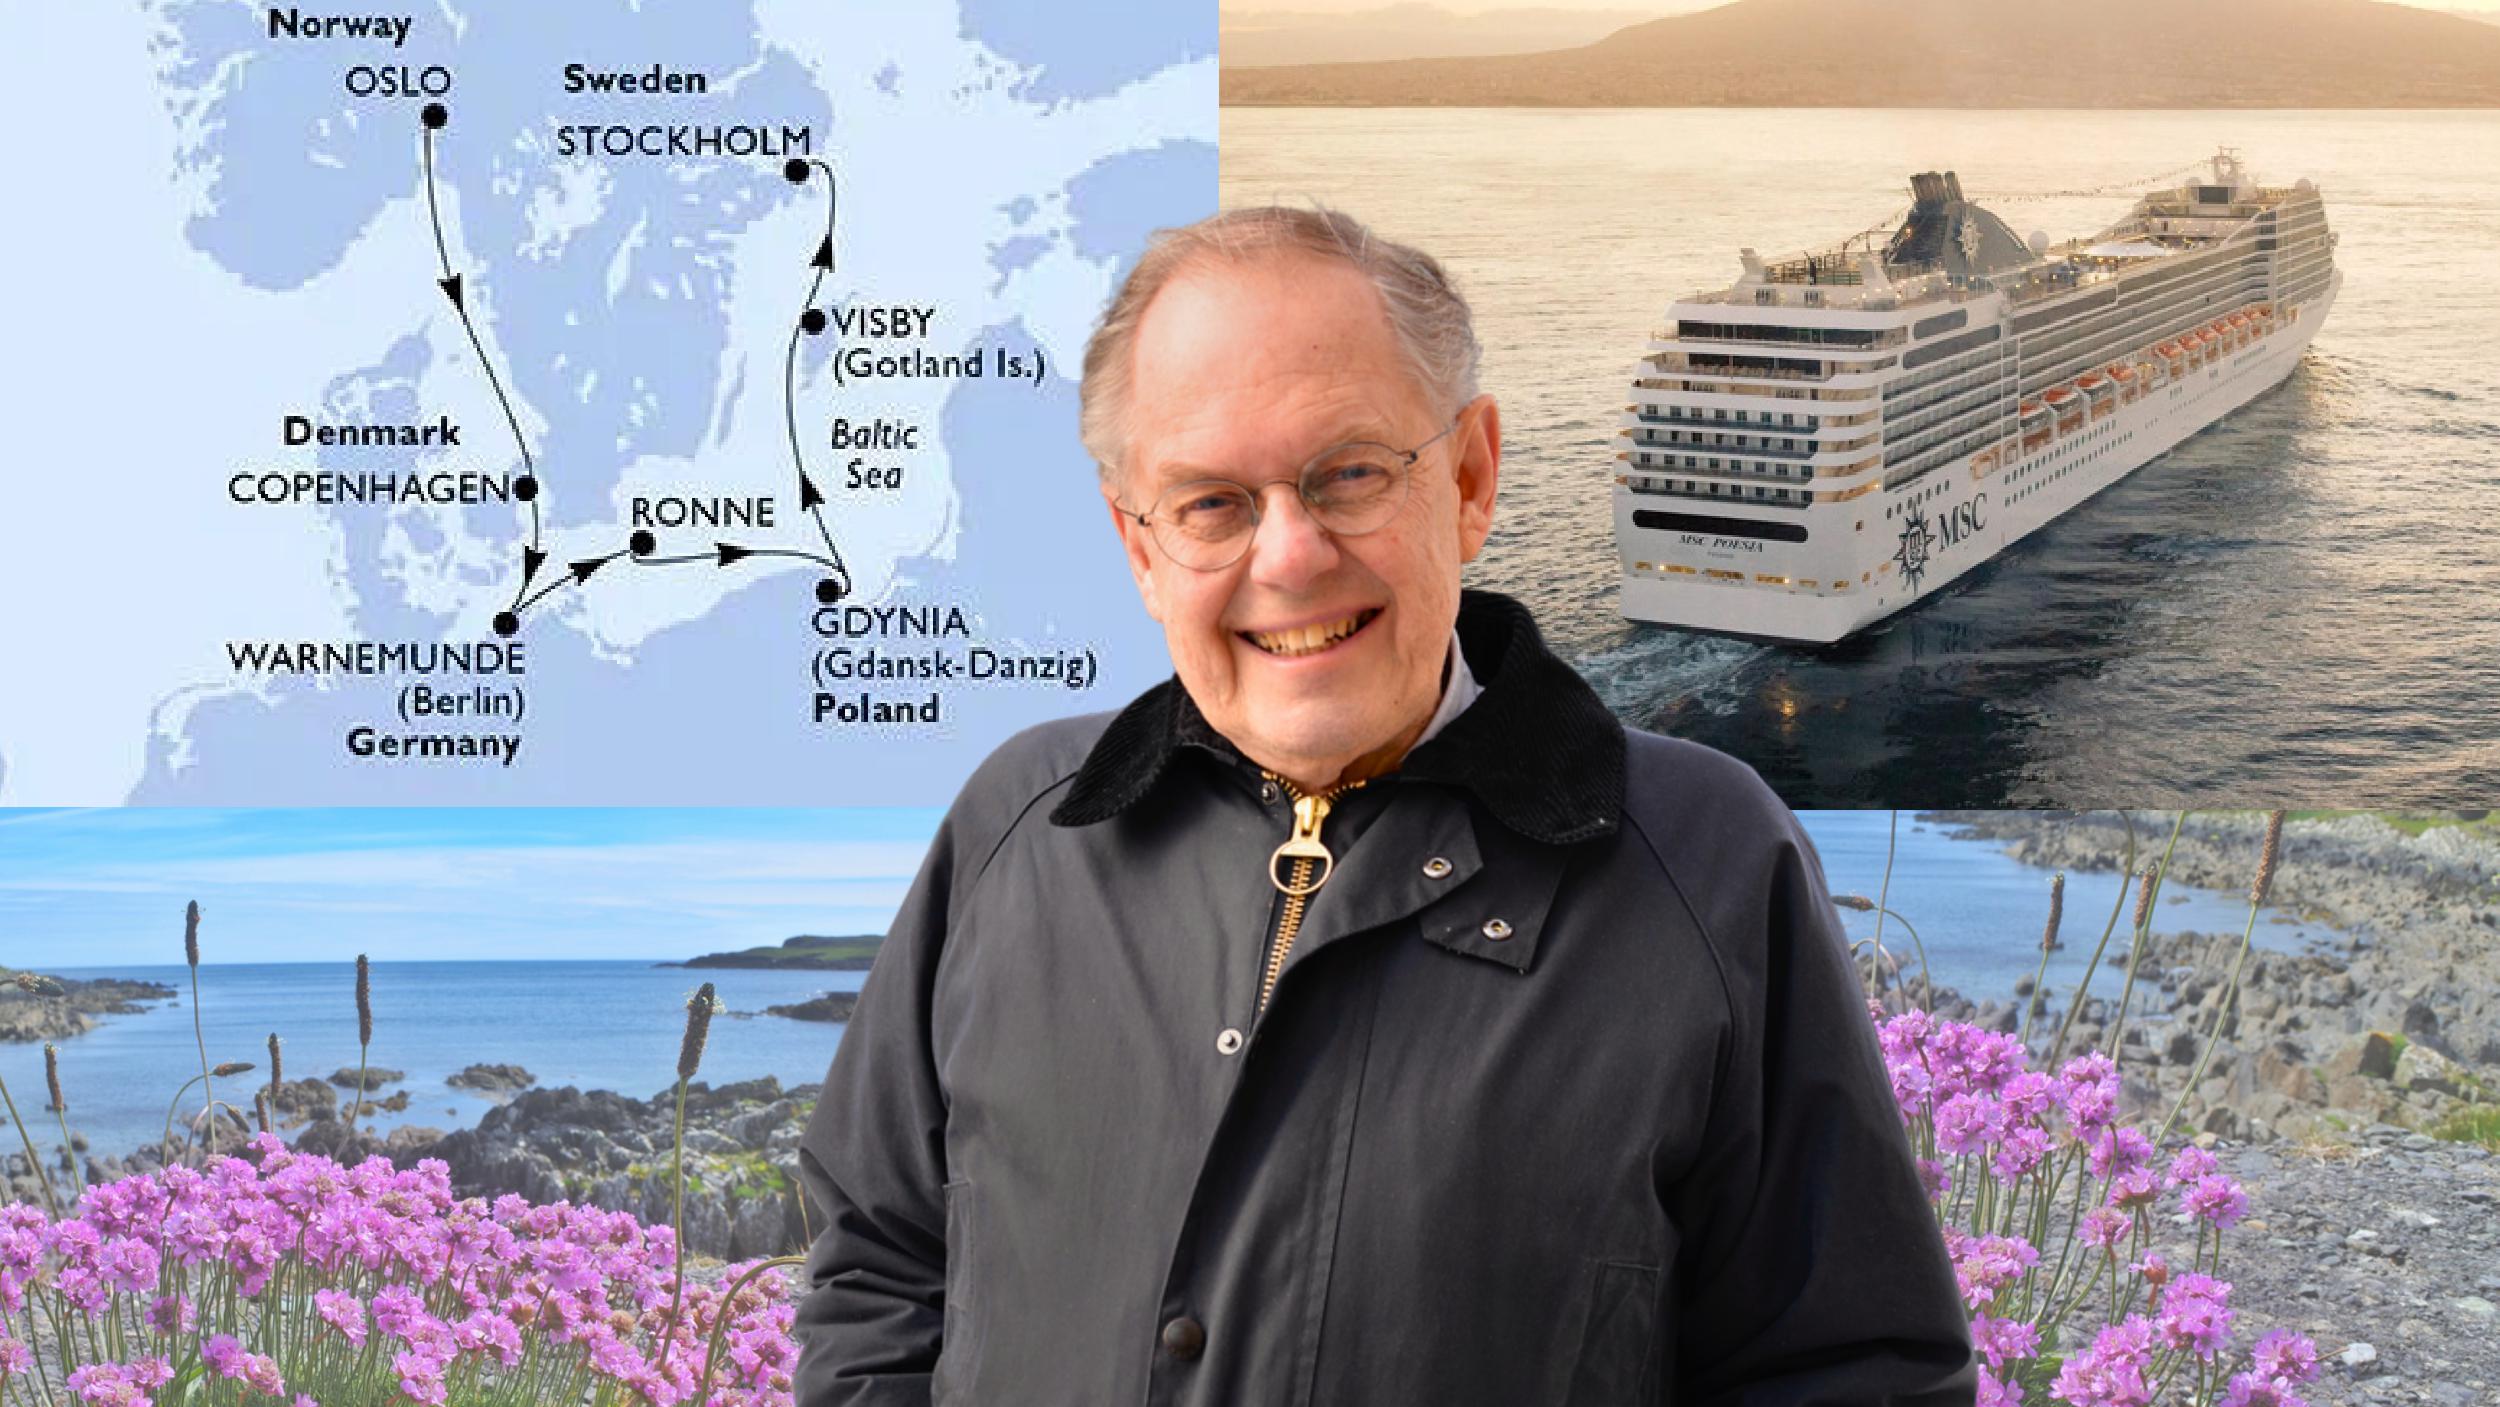 Cruise i Austersjøen med Gunnstein Akselberg